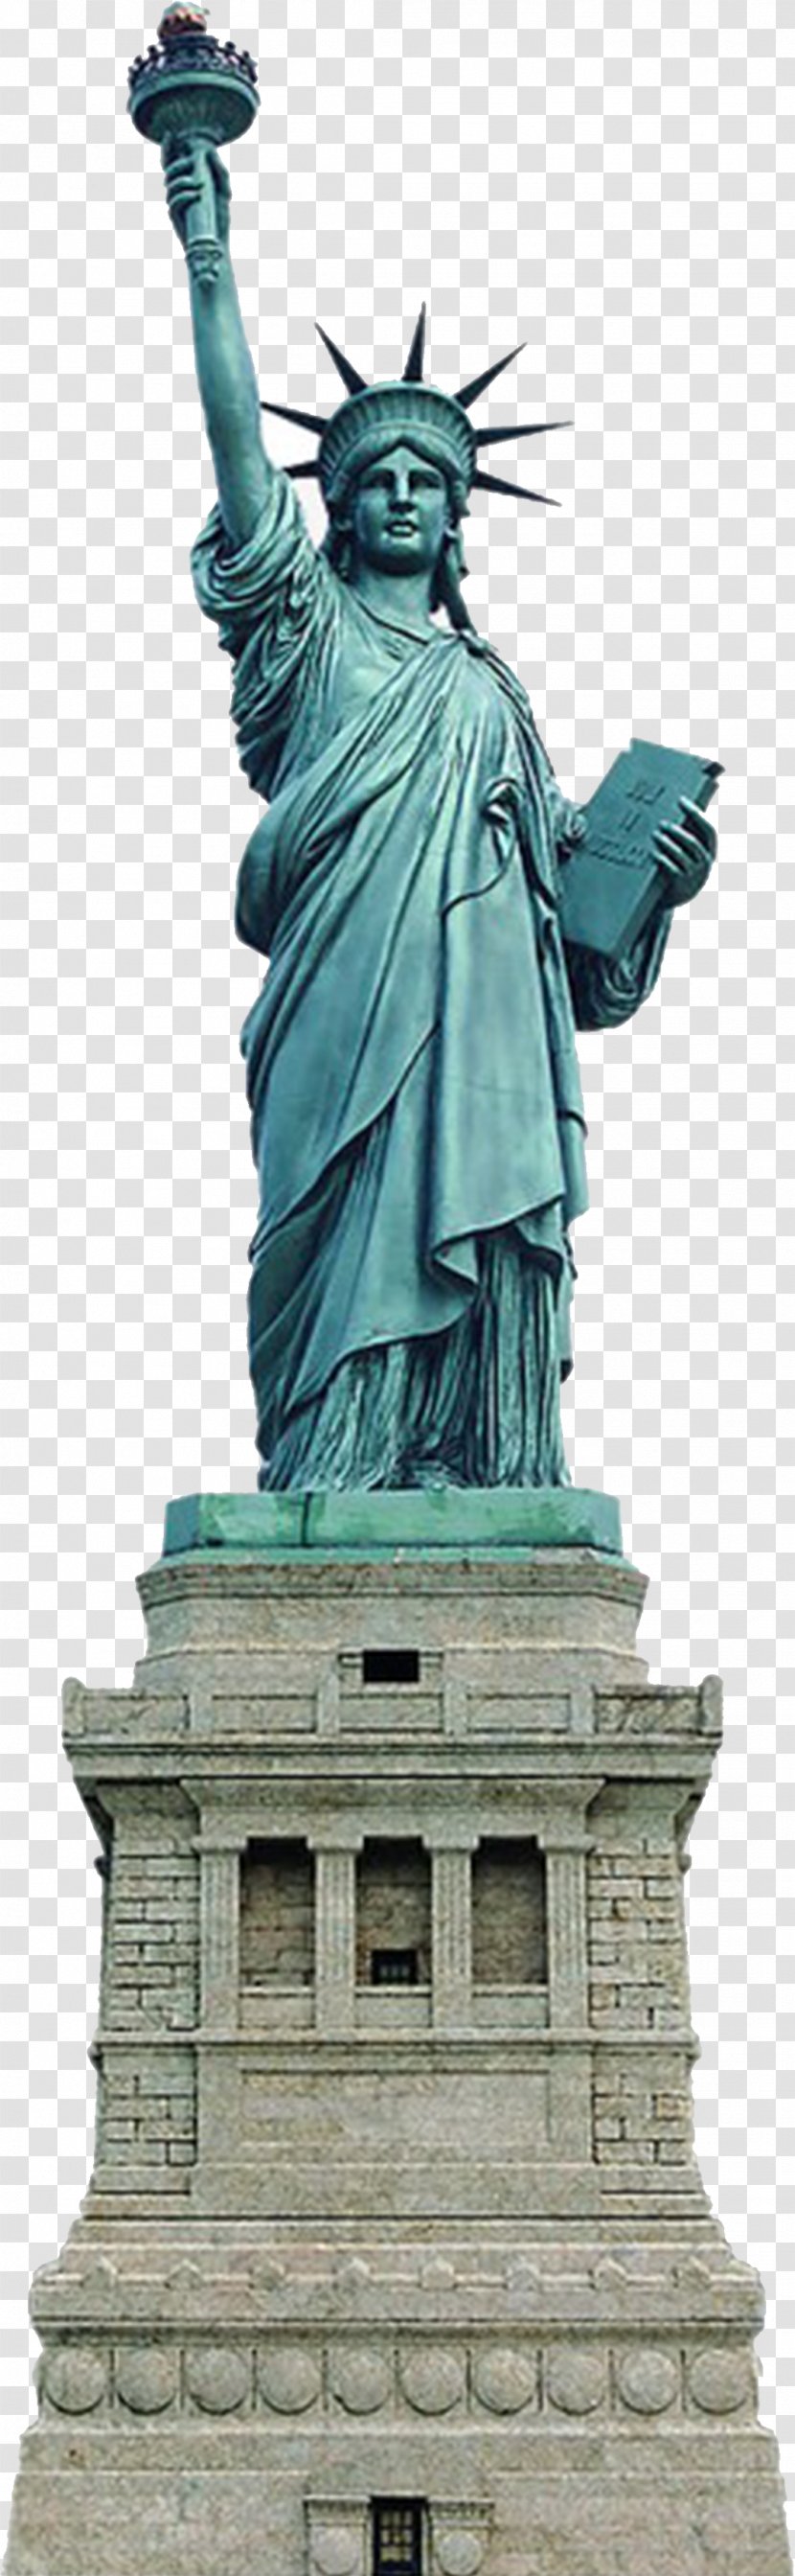 Statue Of Liberty Clip Art - Classical Sculpture - Vintage Decoration Transparent PNG